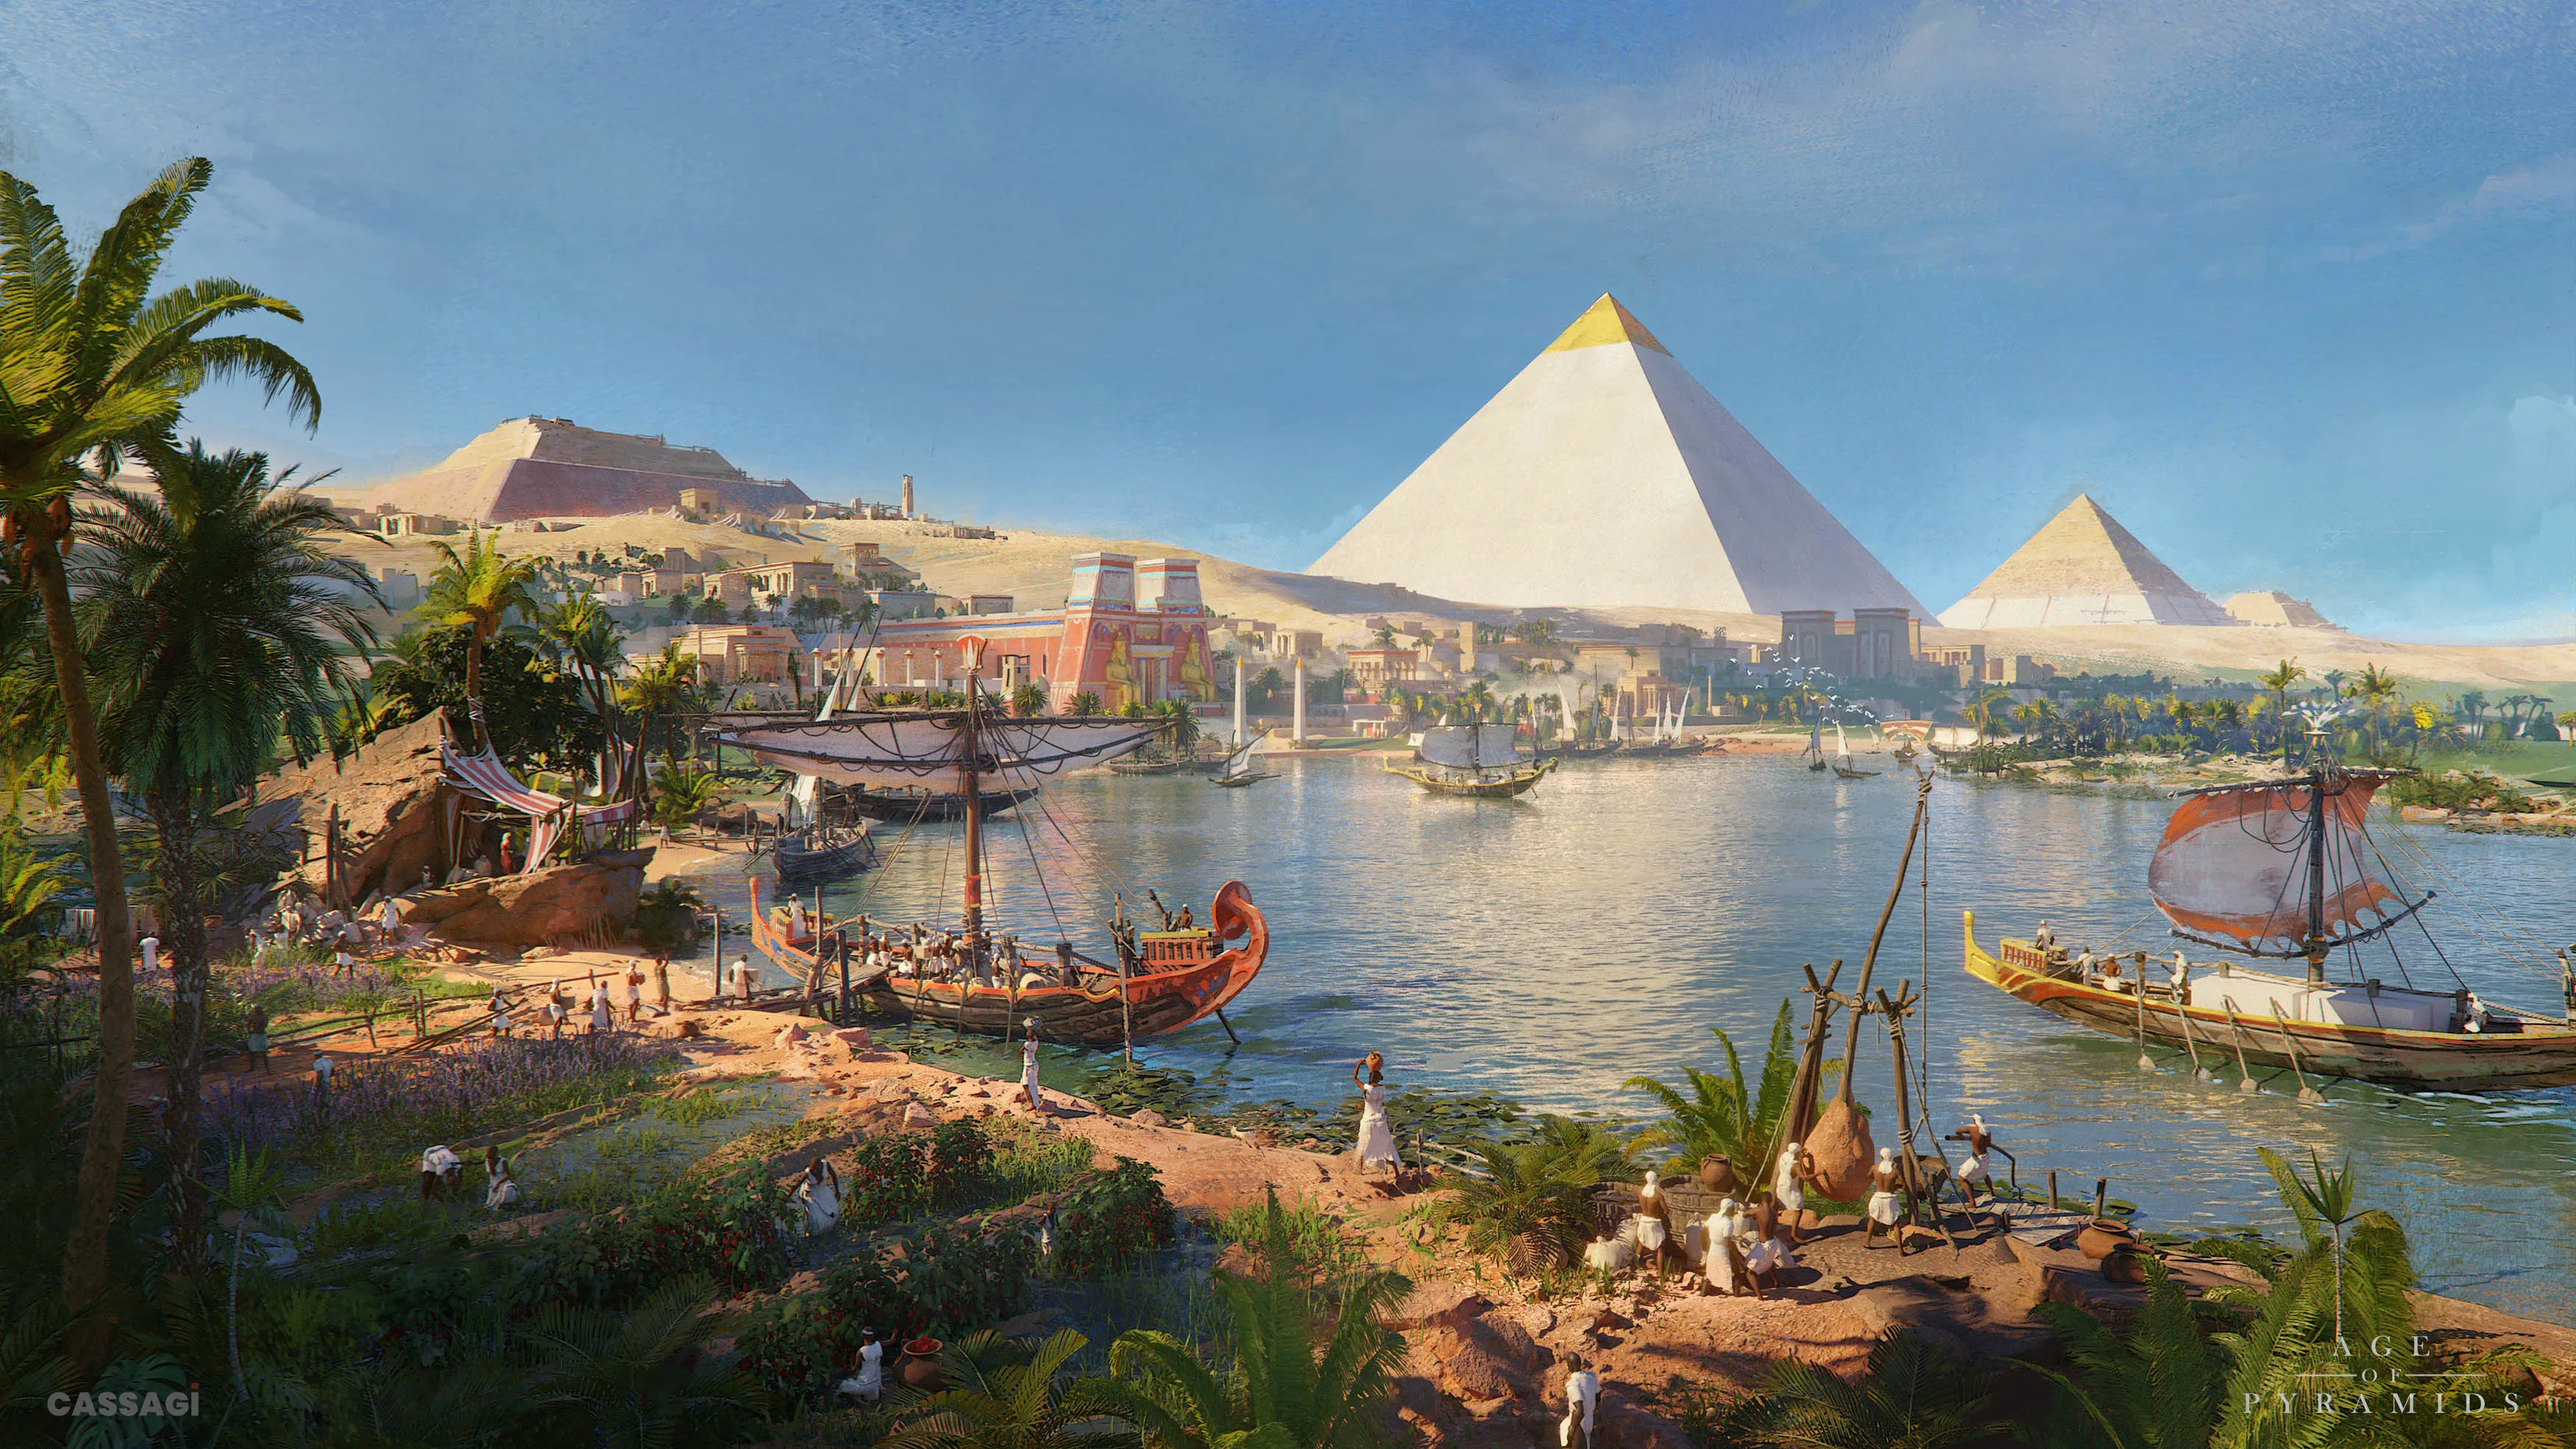 Age Of Pyramids illustration by Gabriel Nagypal from <a href="https://www.artstation.com/artwork/kDvXE0" rel="nofollow">artstation</a>